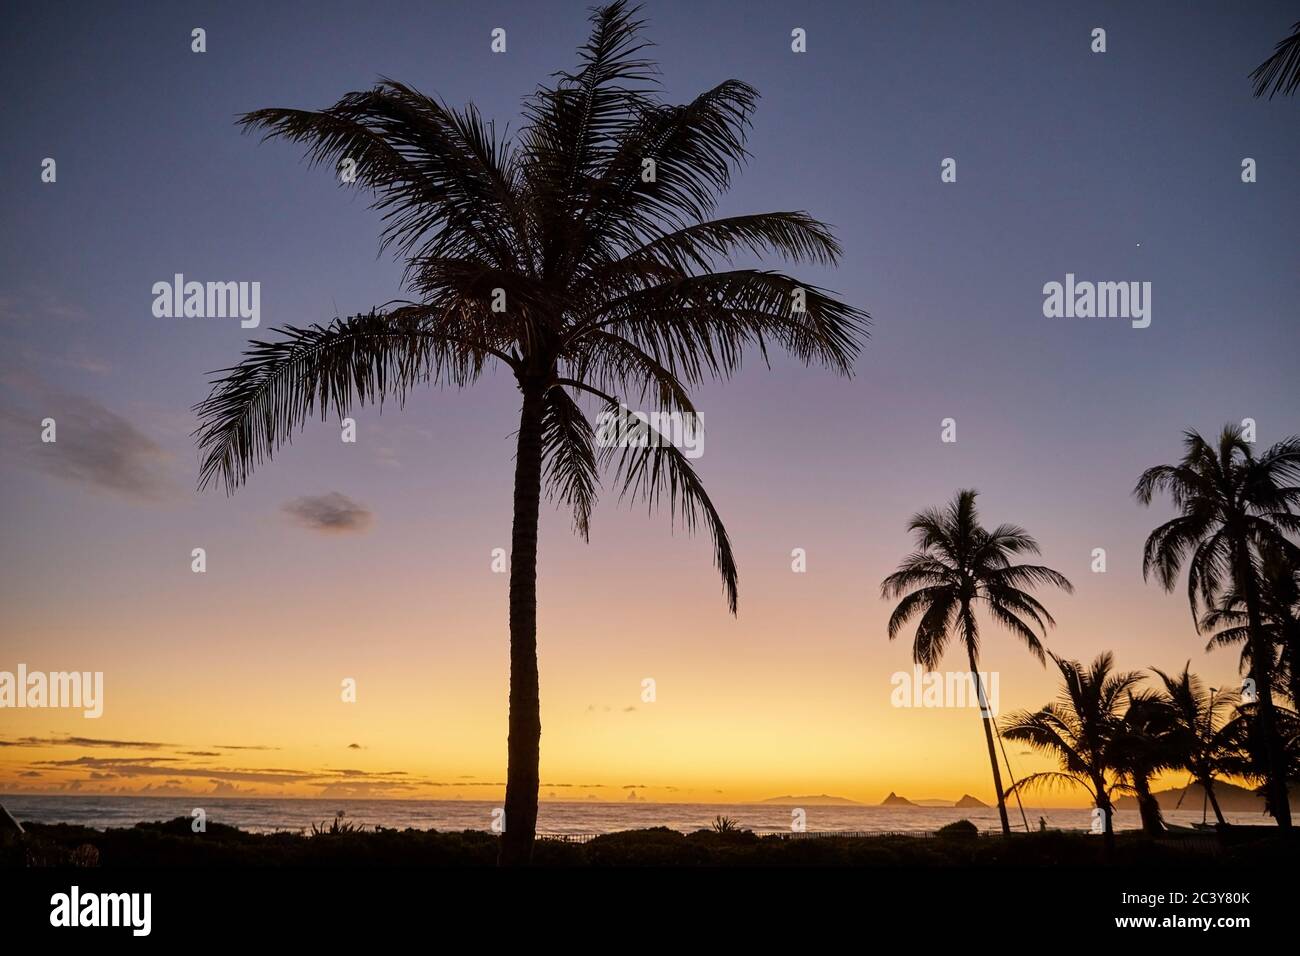 USA, Hawaii, O'ahu, Kailua Beach, Silhouette of palm trees at sunset Stock Photo